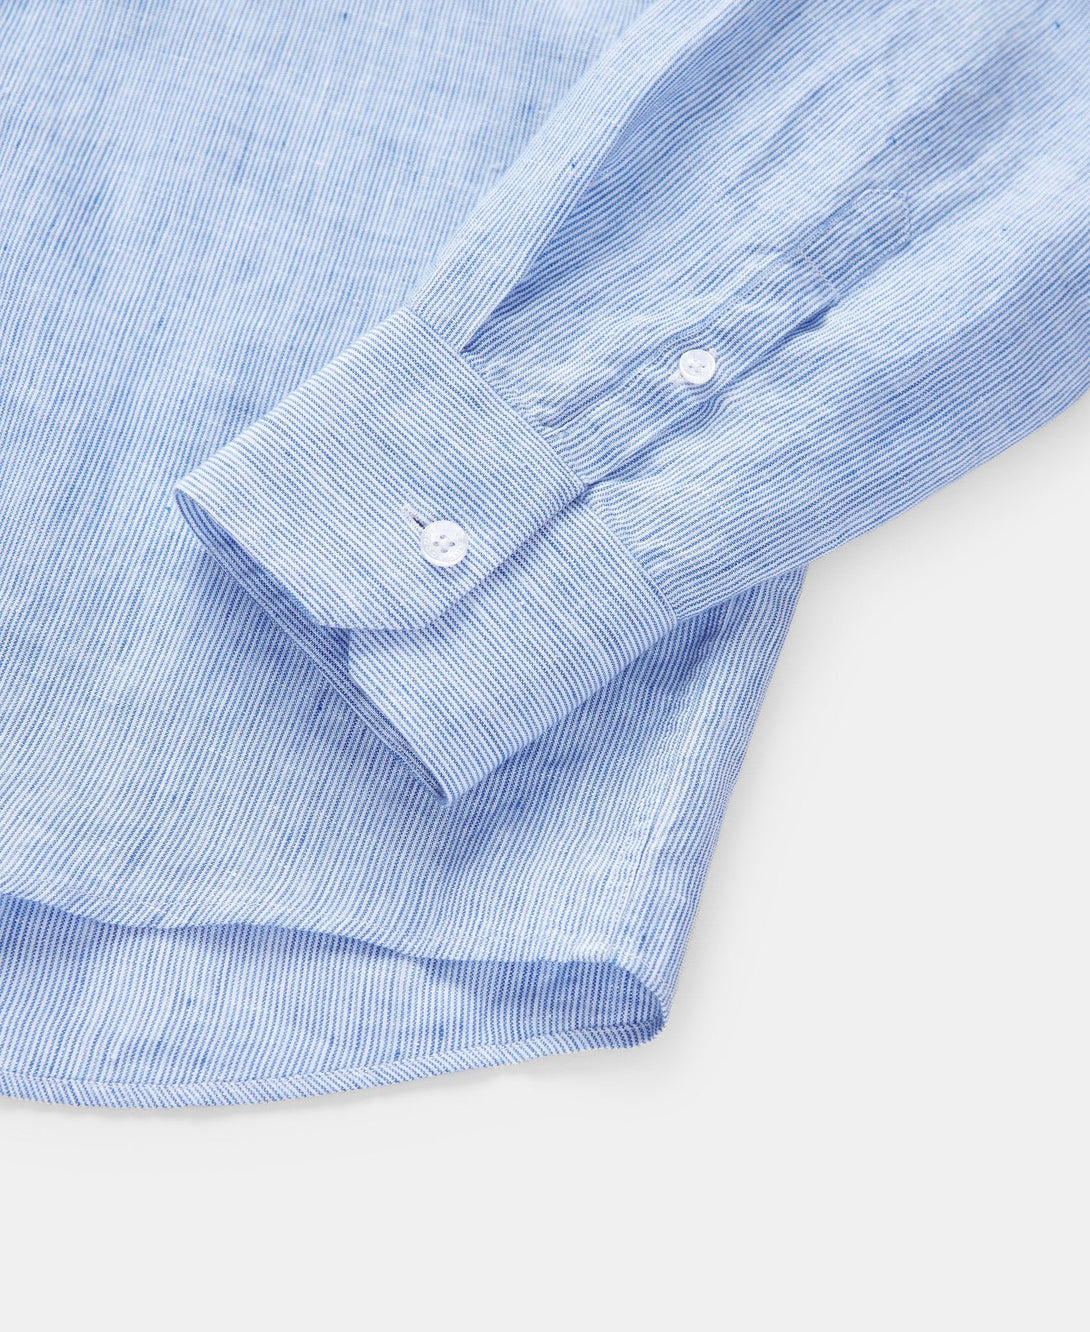 Men Shirt | White/Sky Blue Striped Shirt With Mao Collar In Linen by Spanish designer Adolfo Dominguez